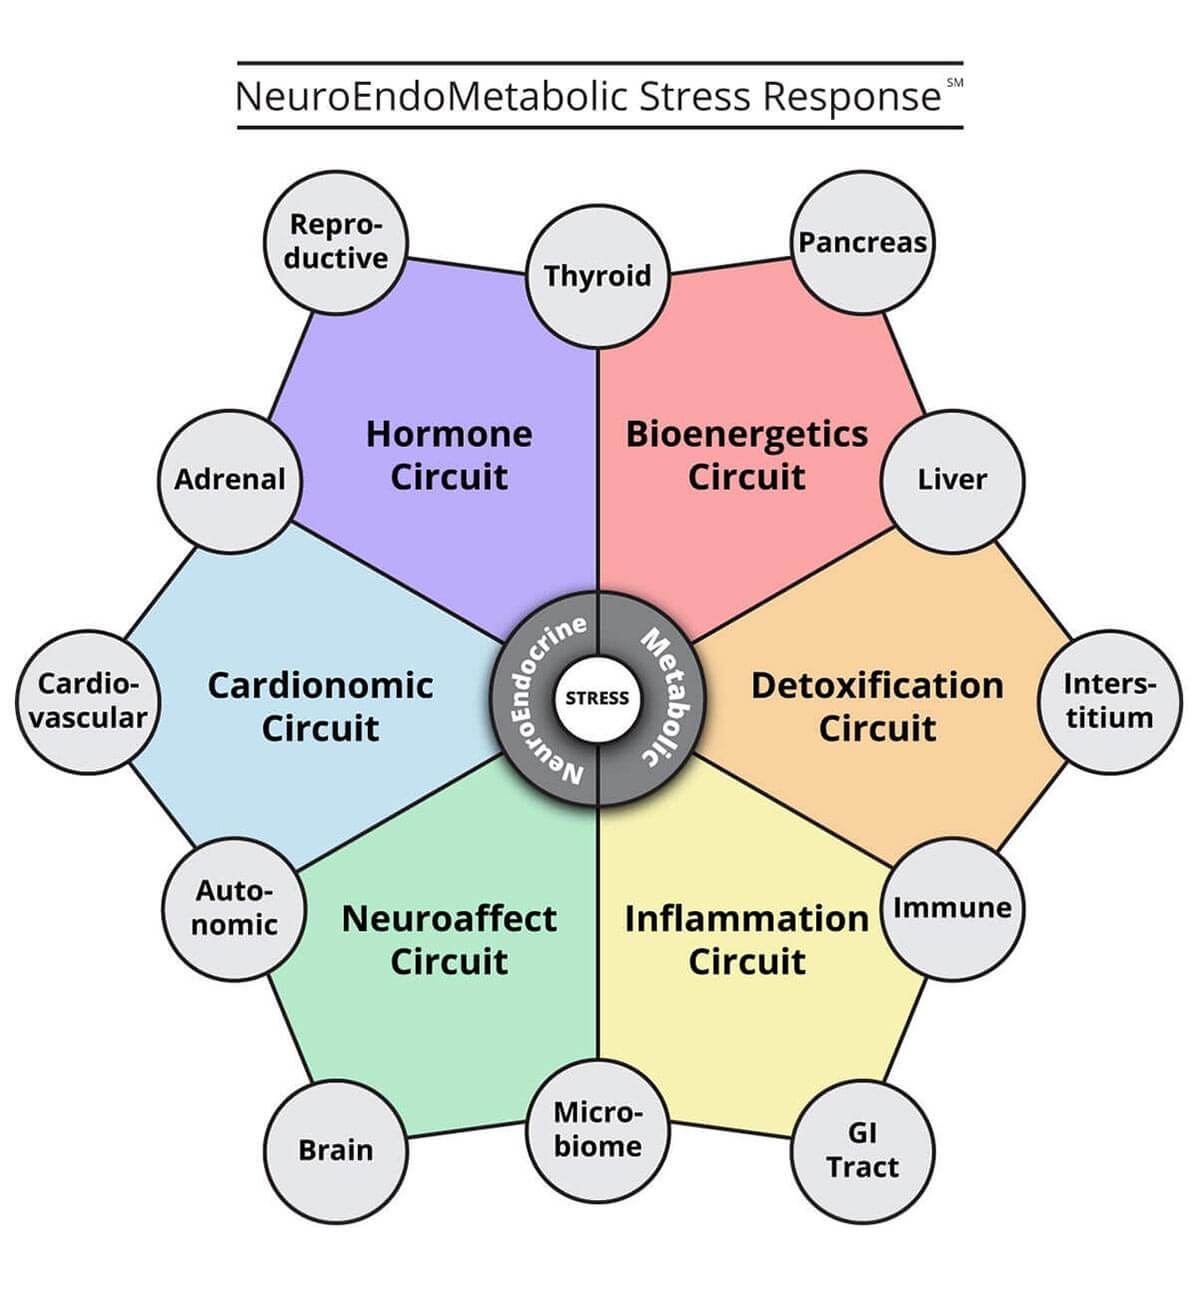 Hypothalamus hormones are part of the hormonal circuit of the NEM stress response